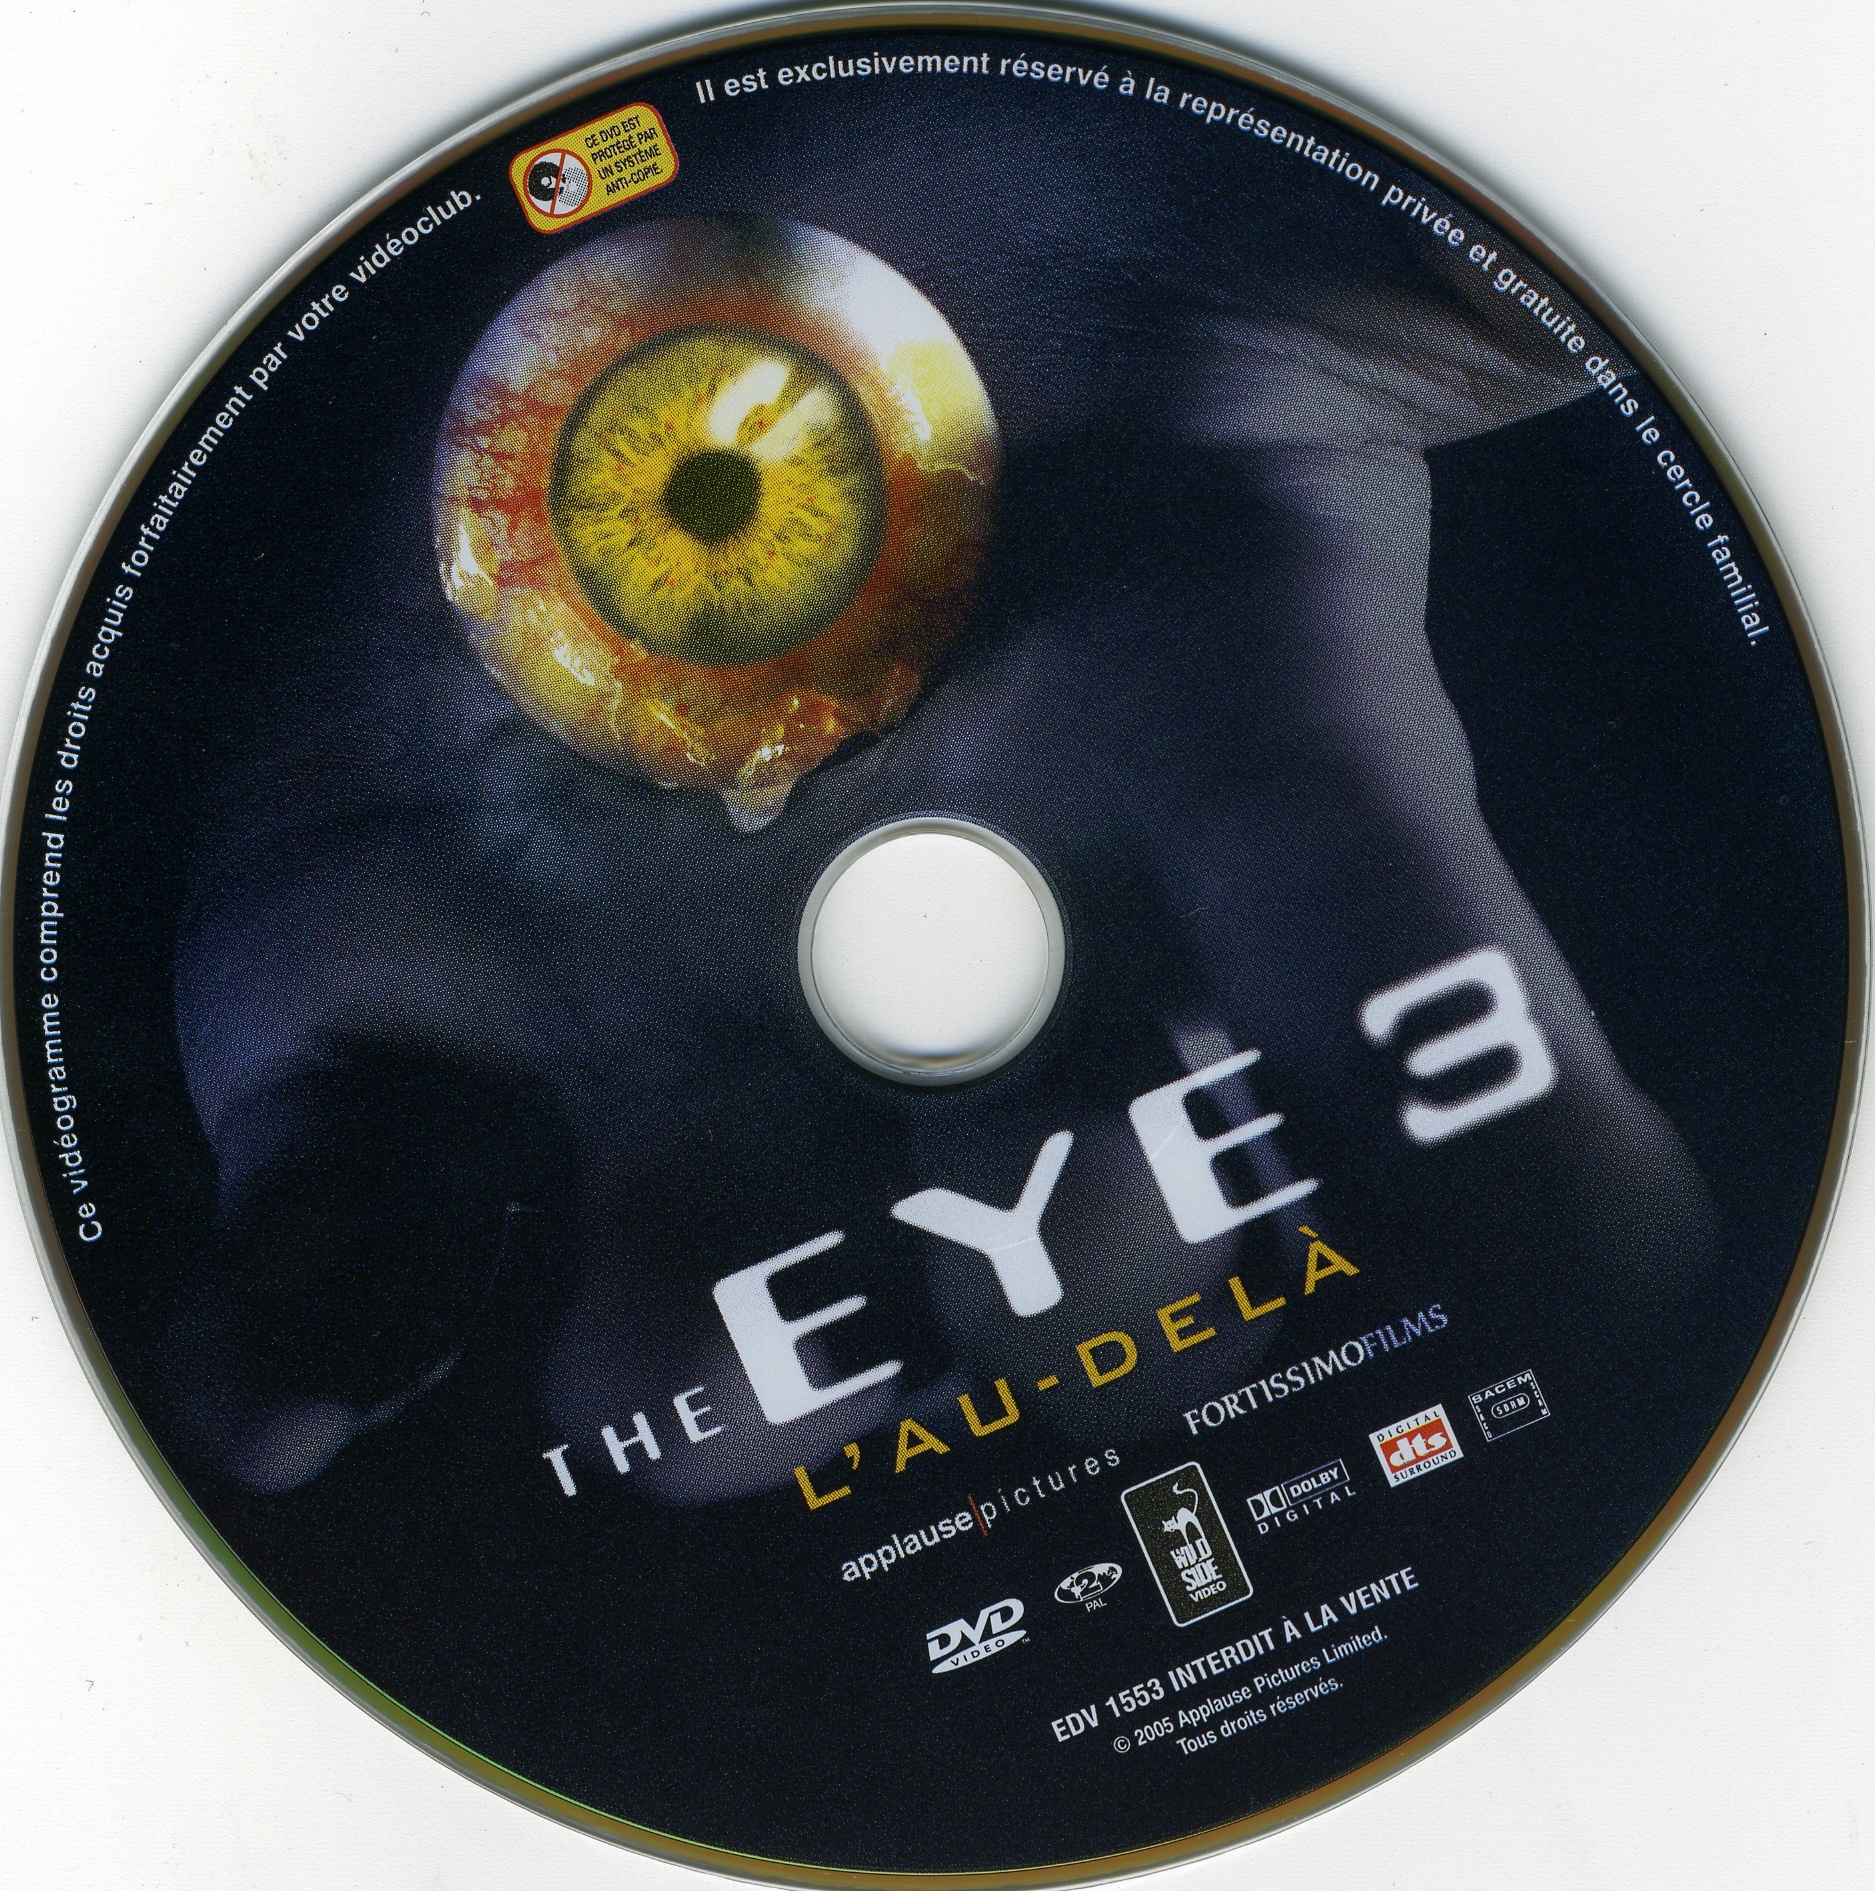 The eye 3